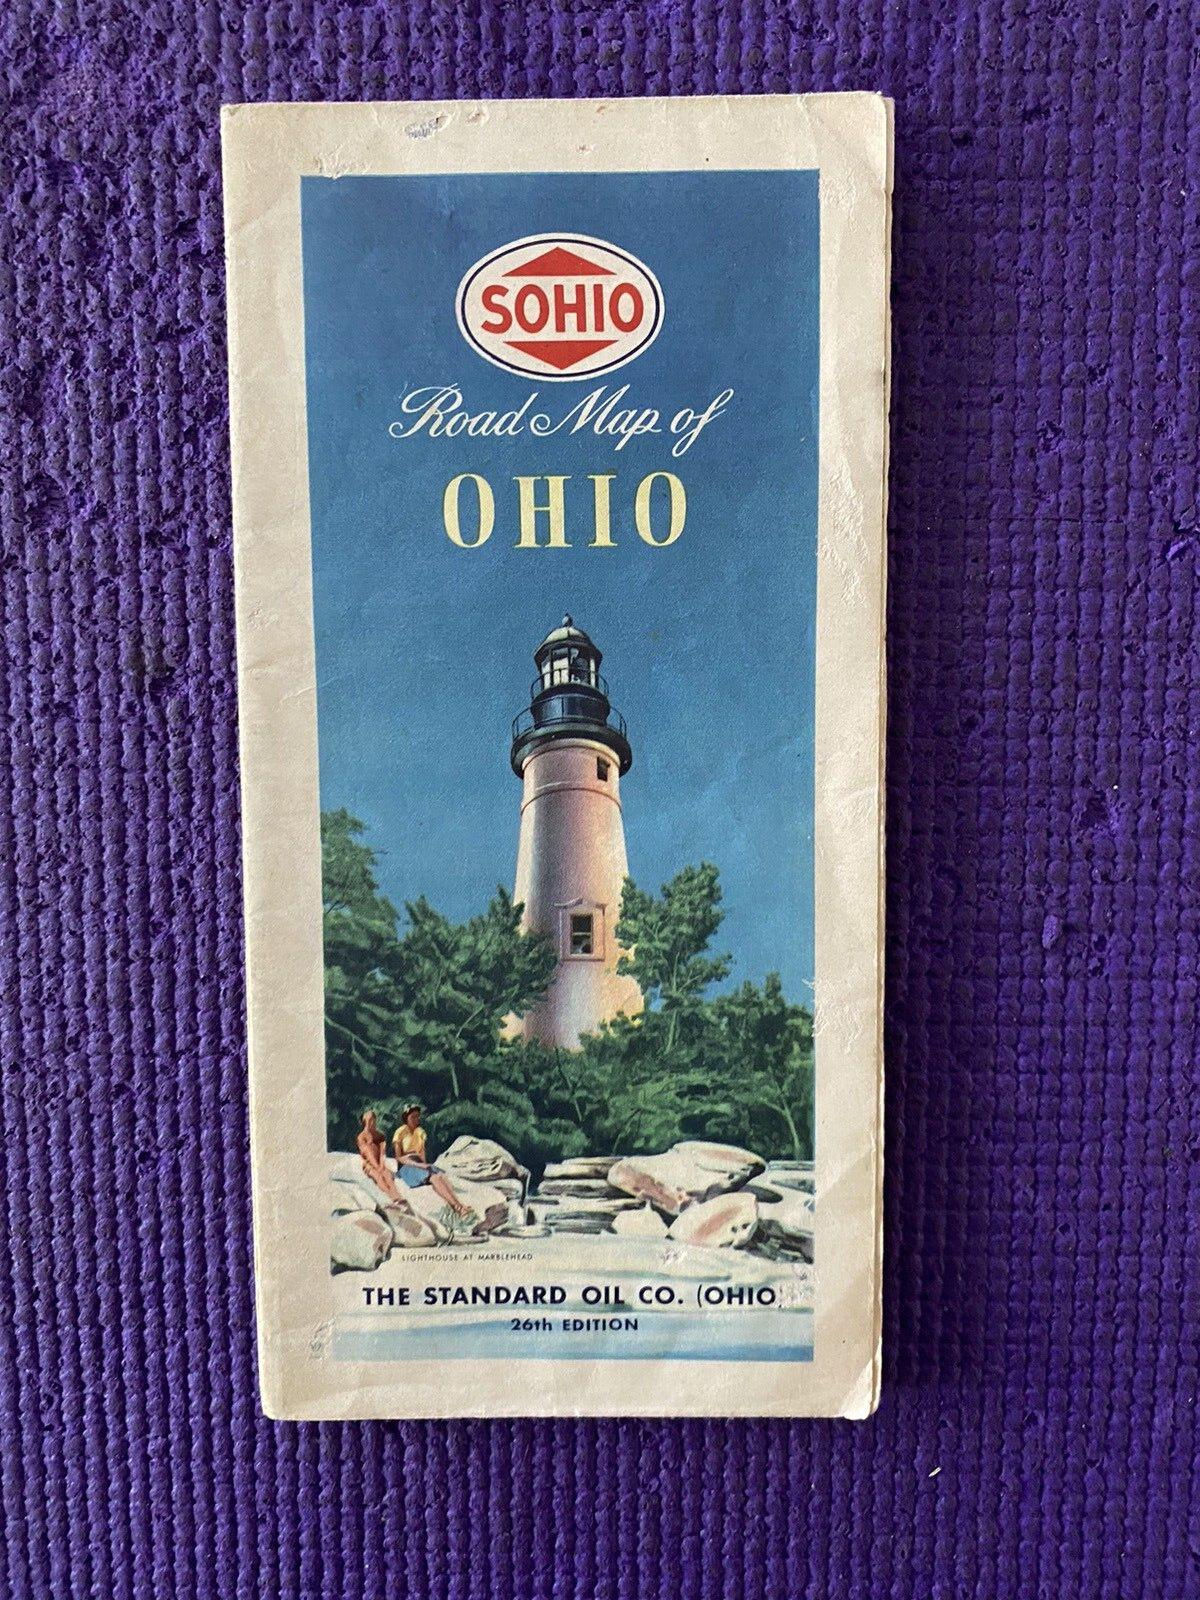 Vintage SOHIO Road Map of Ohio 1948